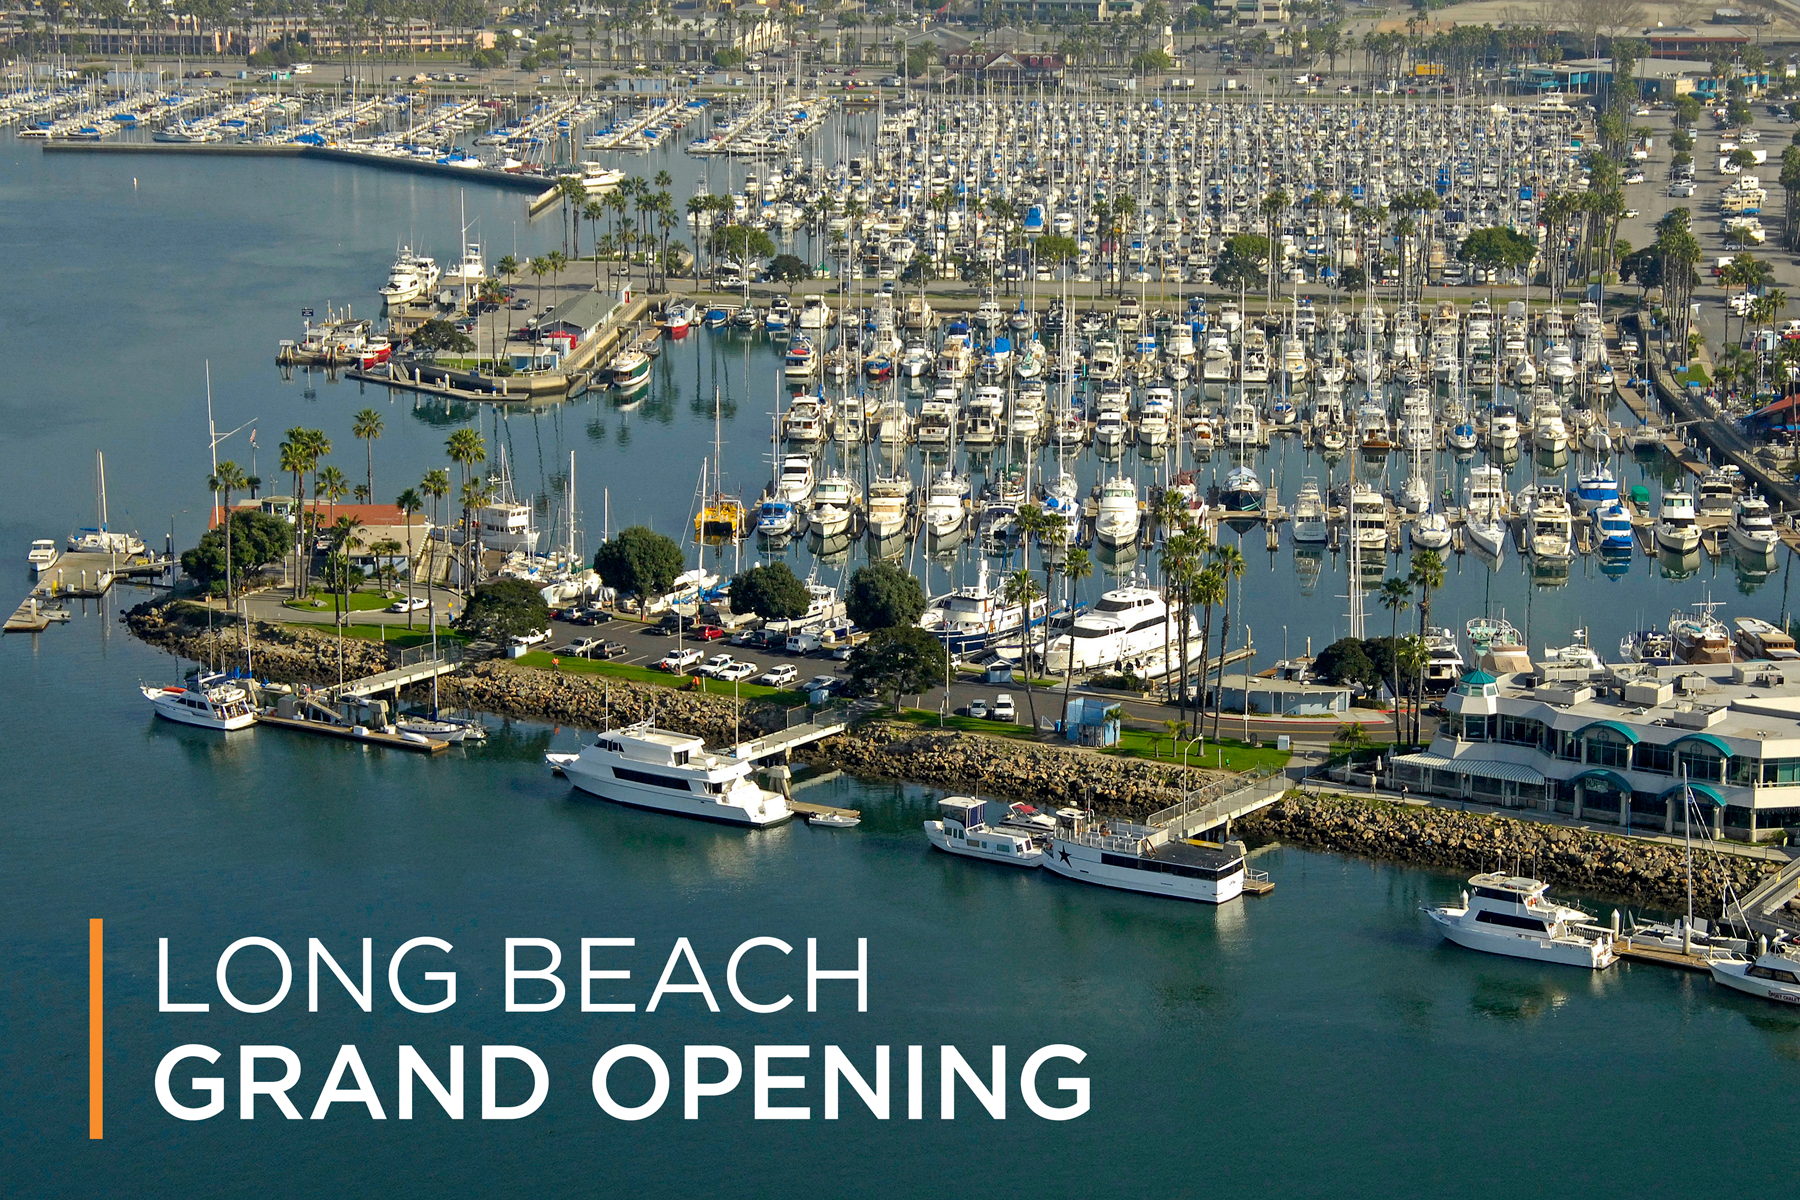 Celebrate Denison Long Beach Grand Opening